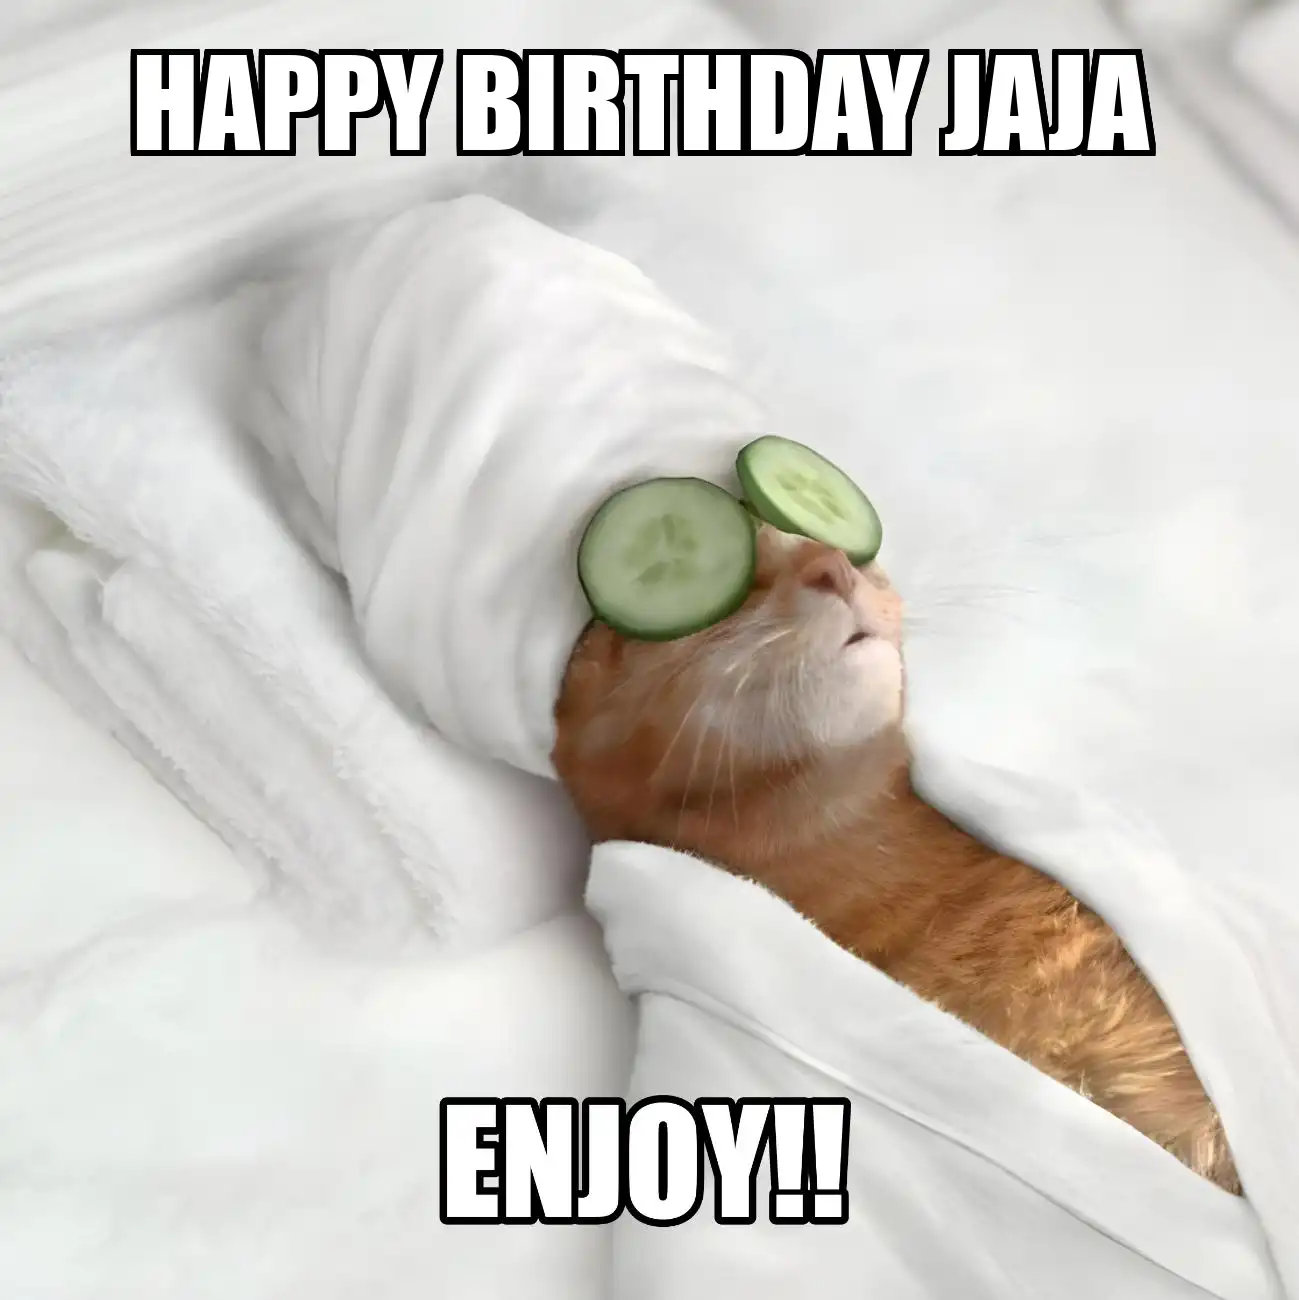 Happy Birthday Jaja Enjoy Cat Meme